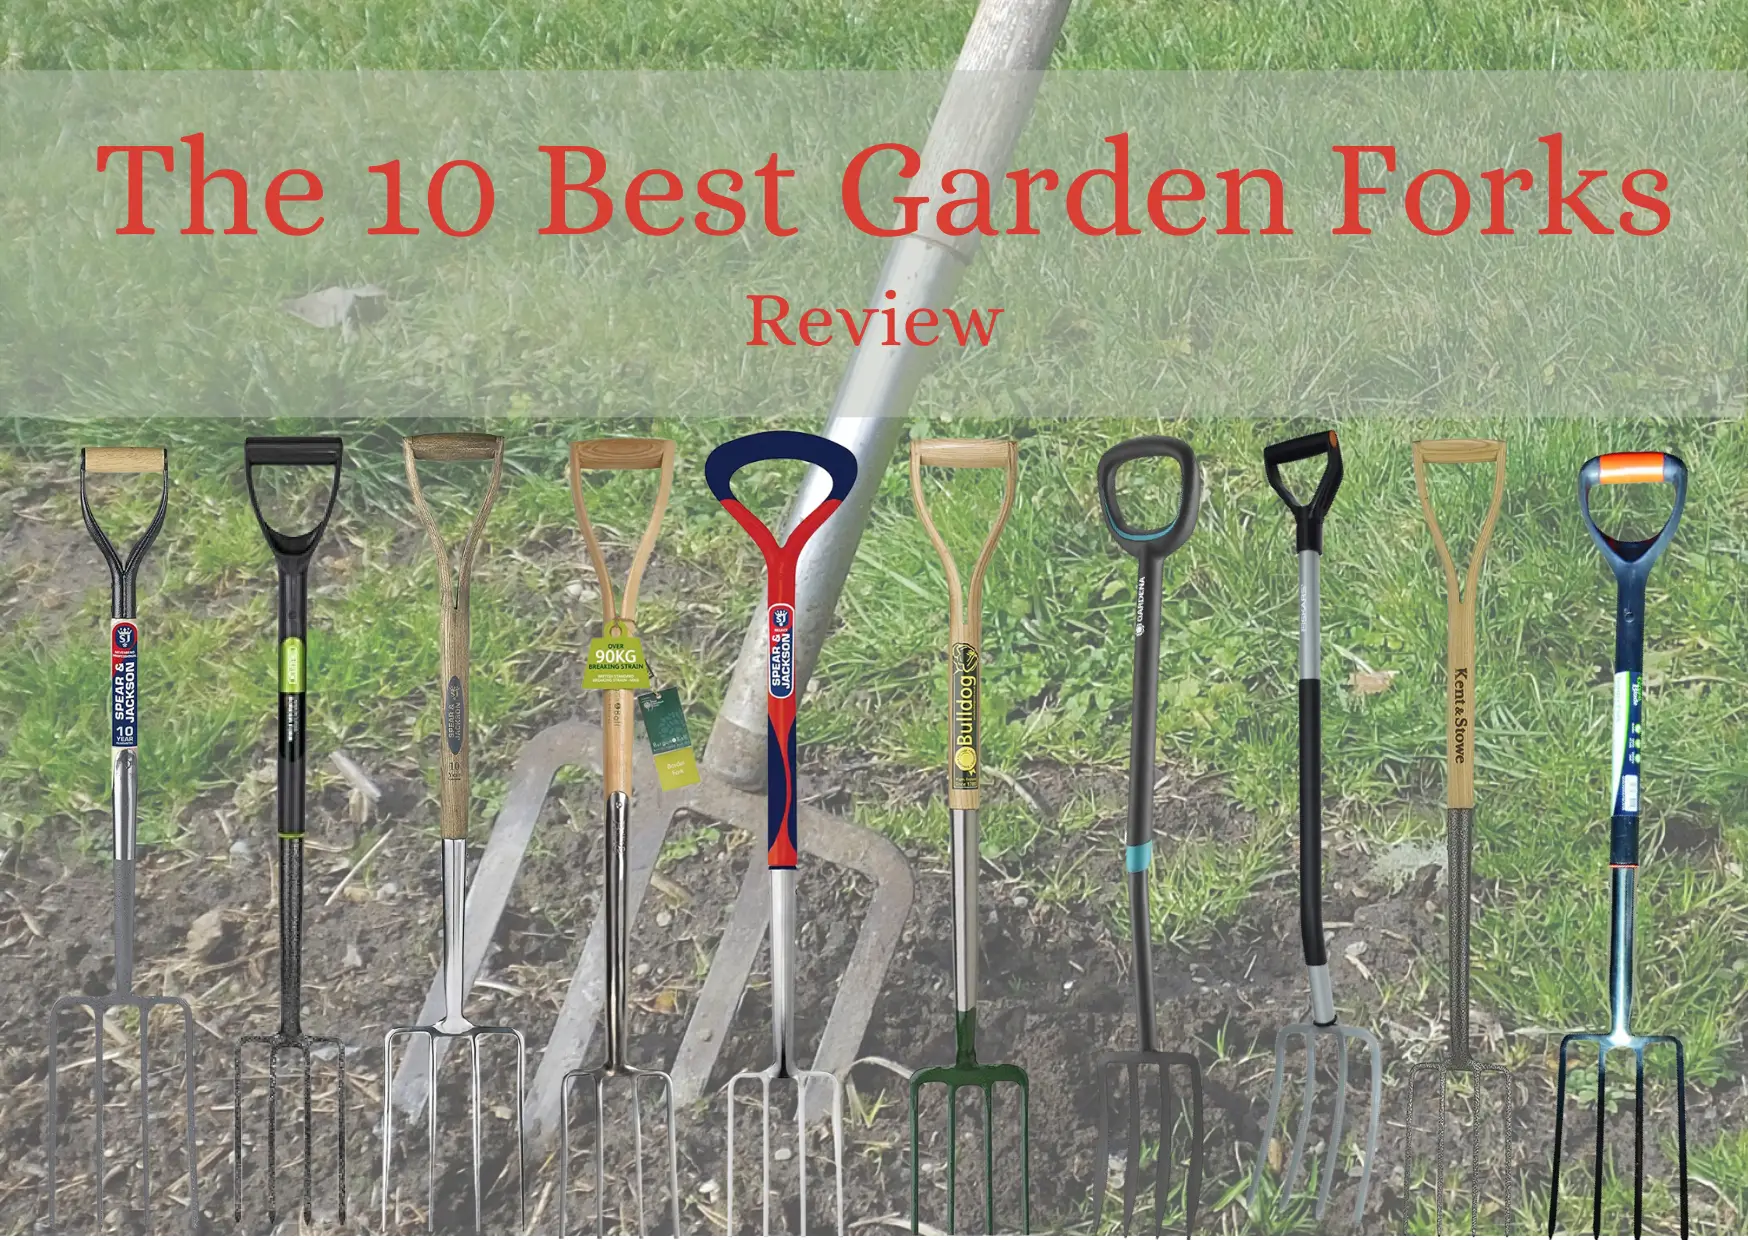 Best Garden Forks